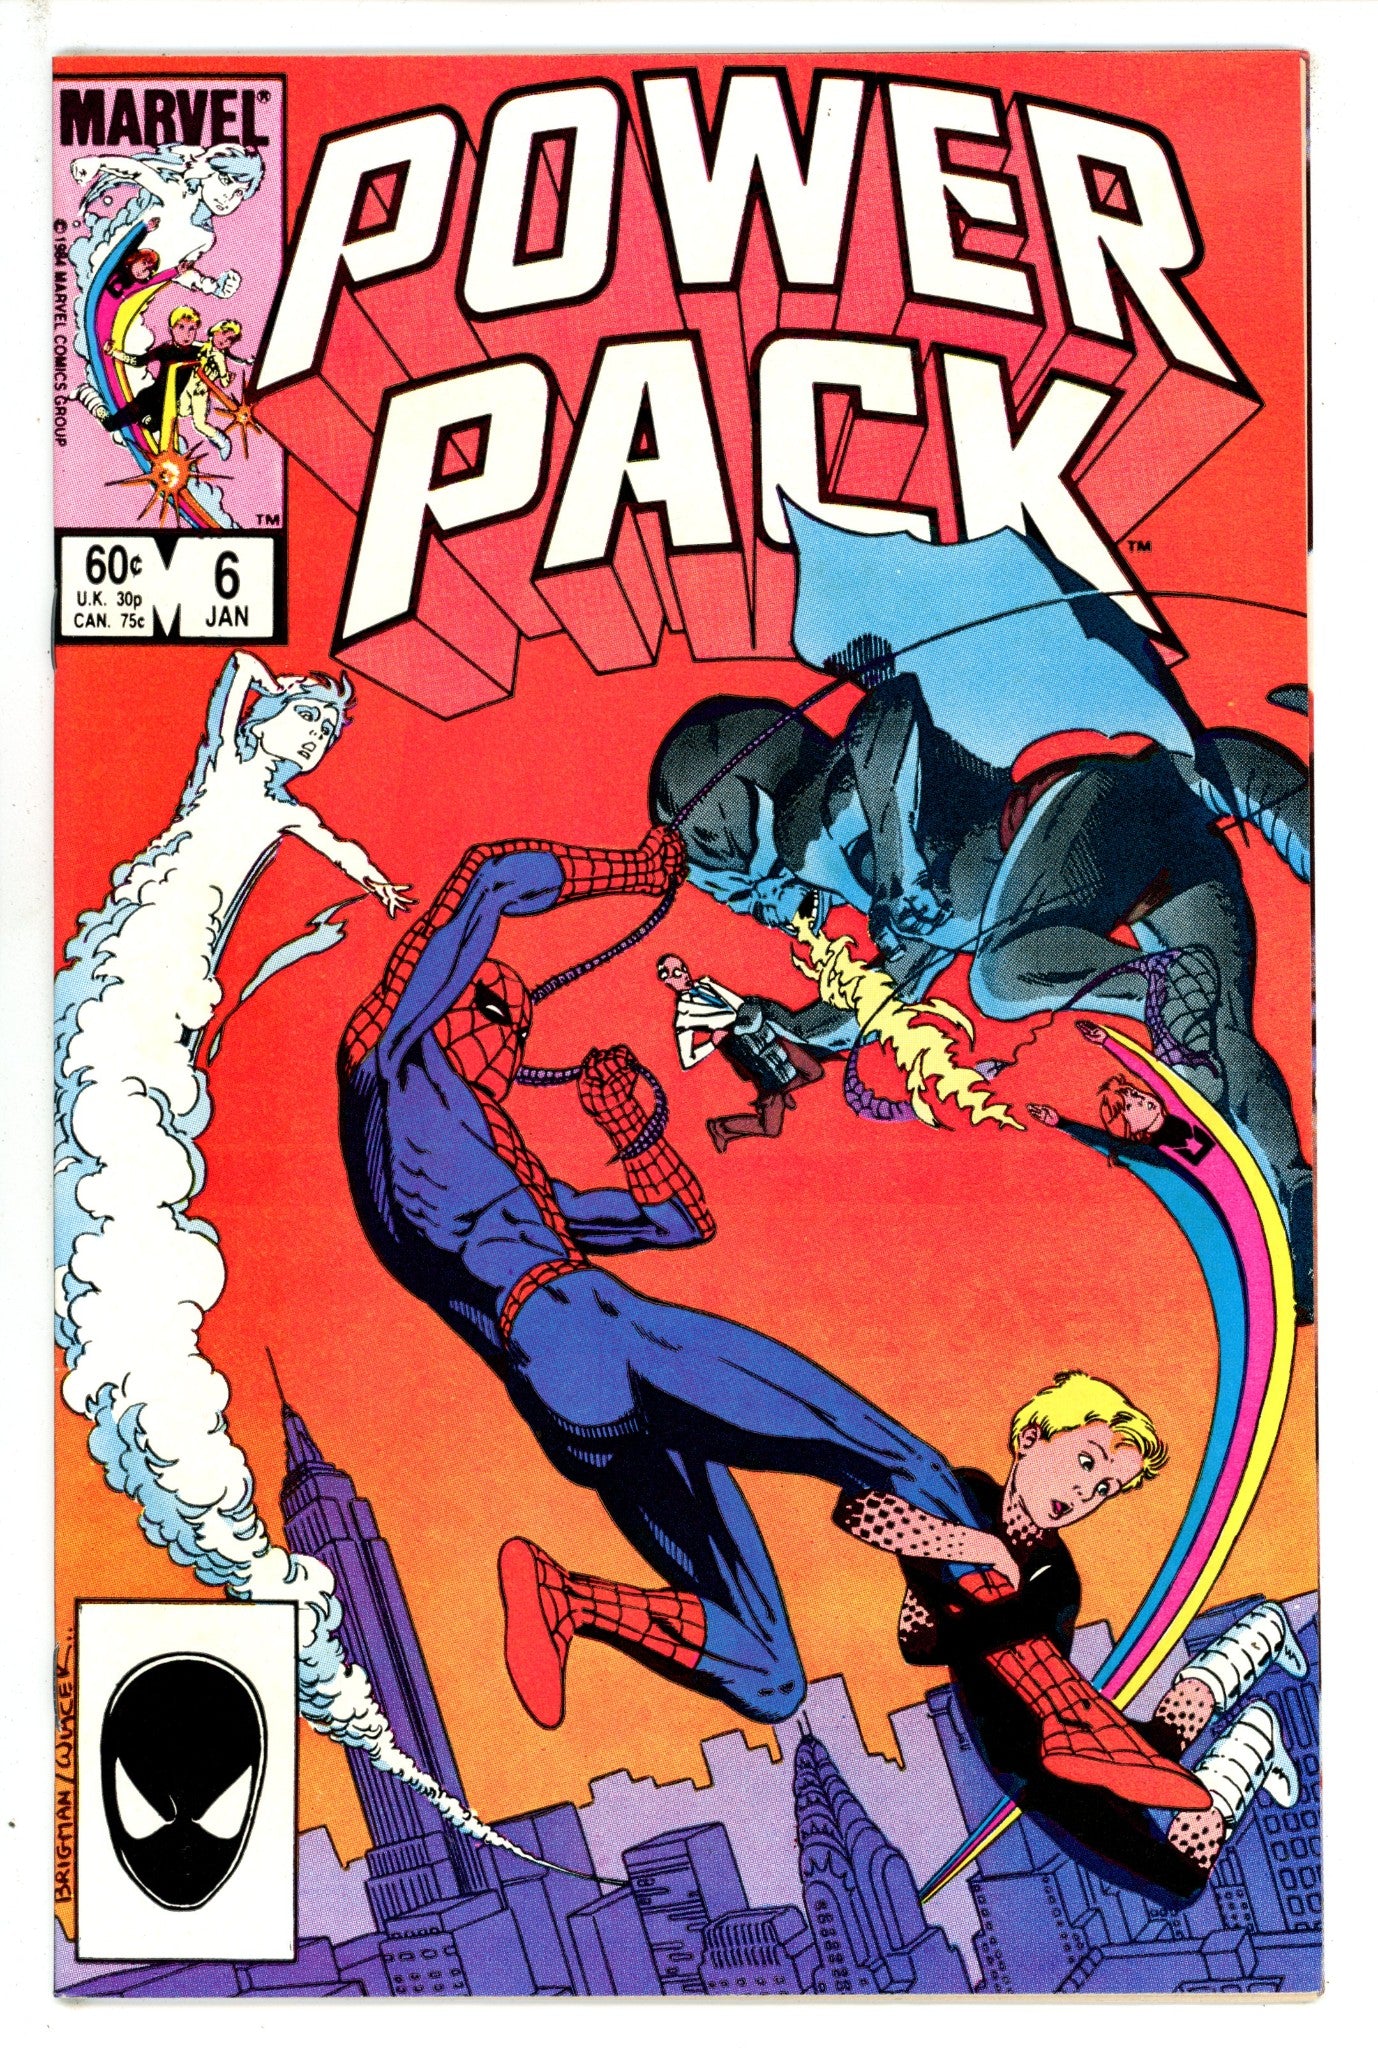 Power Pack Vol 1 6 (1984)